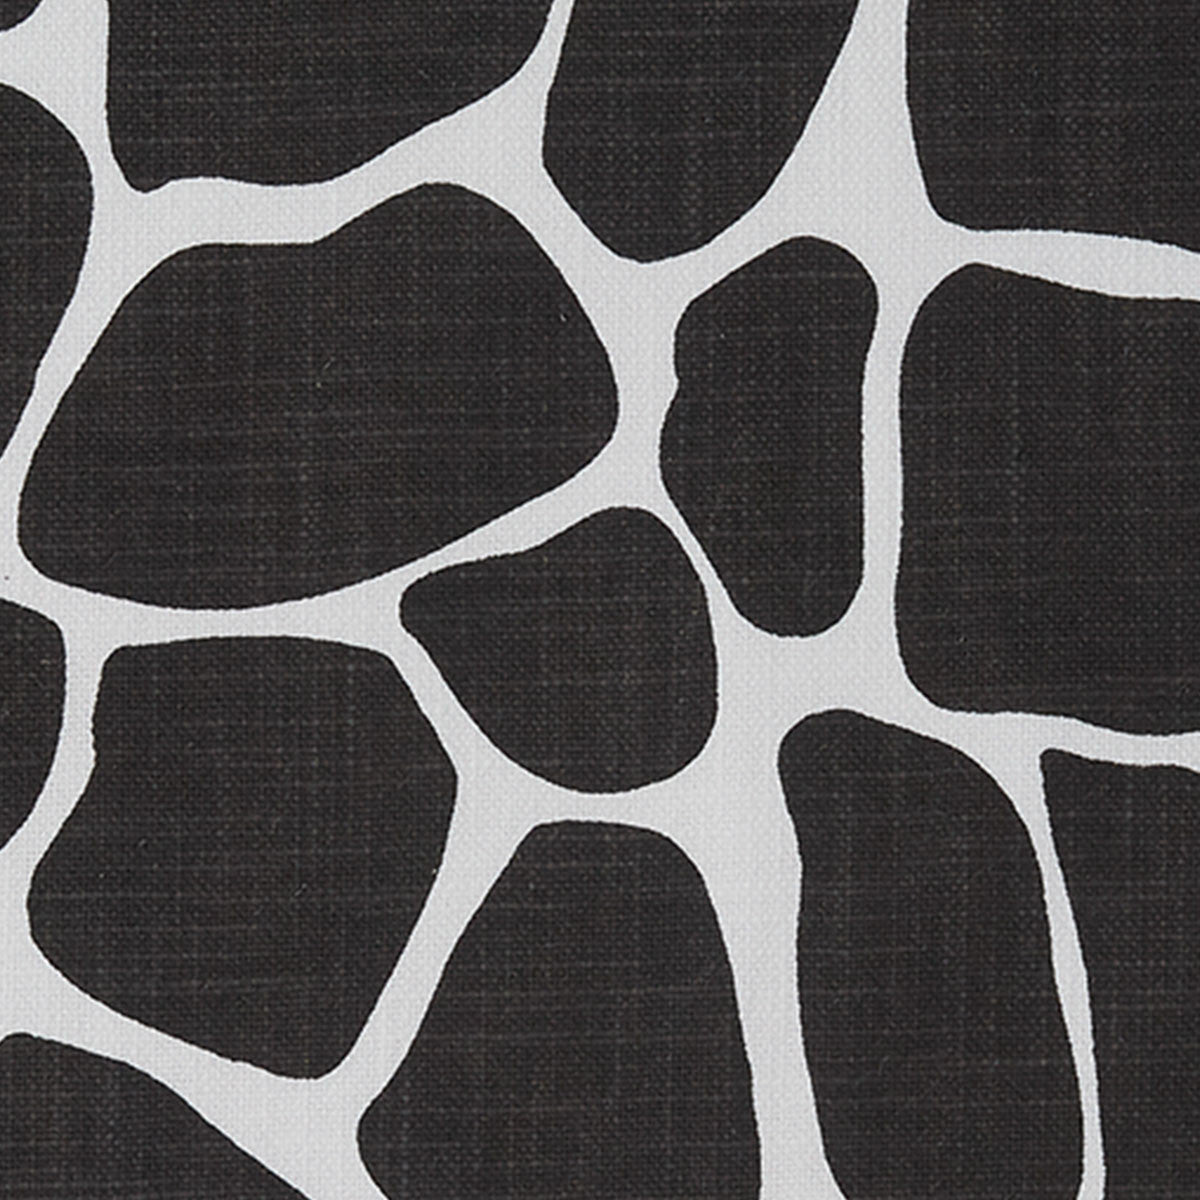 Giraffe Printed Napkin - Black Set of 4  Park Designs